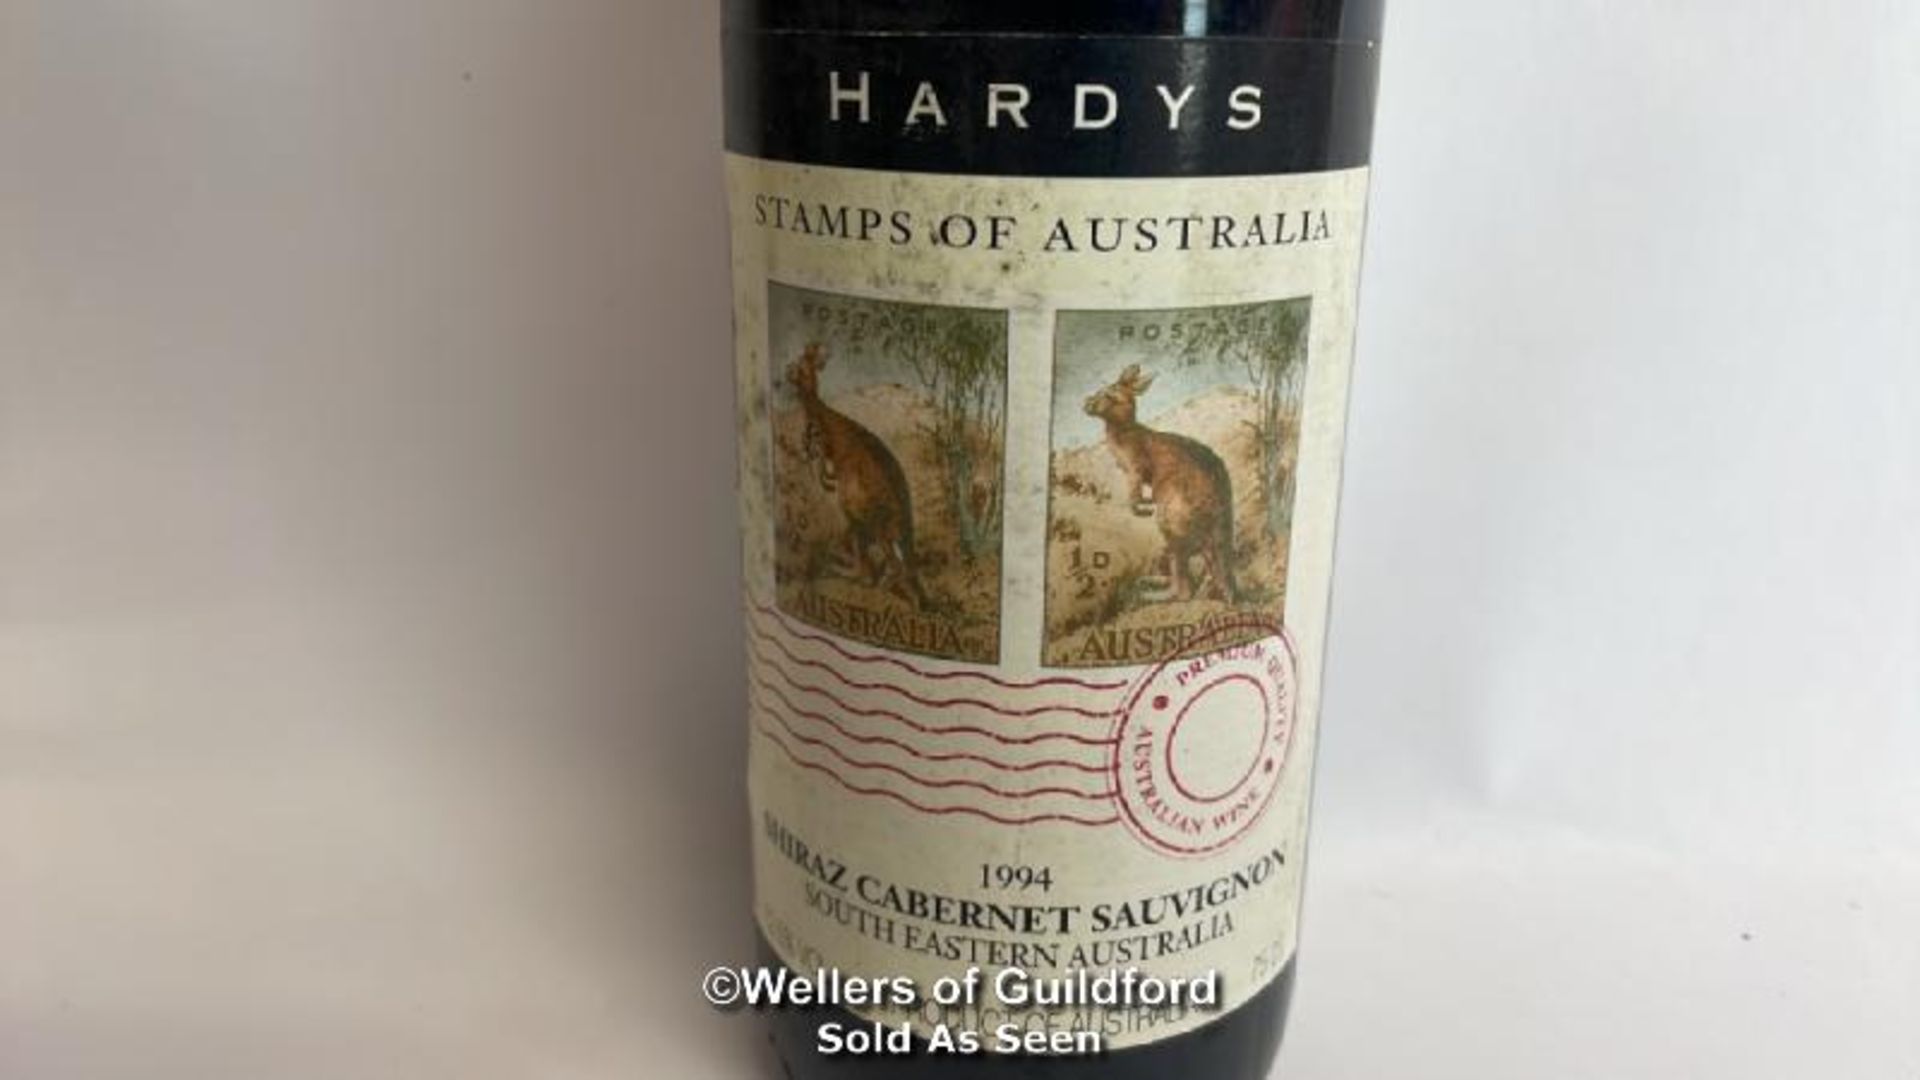 1994 Hardys Shiraz Cabernet Sauvignon "Stamps of Austalia', 75cl, 12.5% vol / Please see images - Image 4 of 8